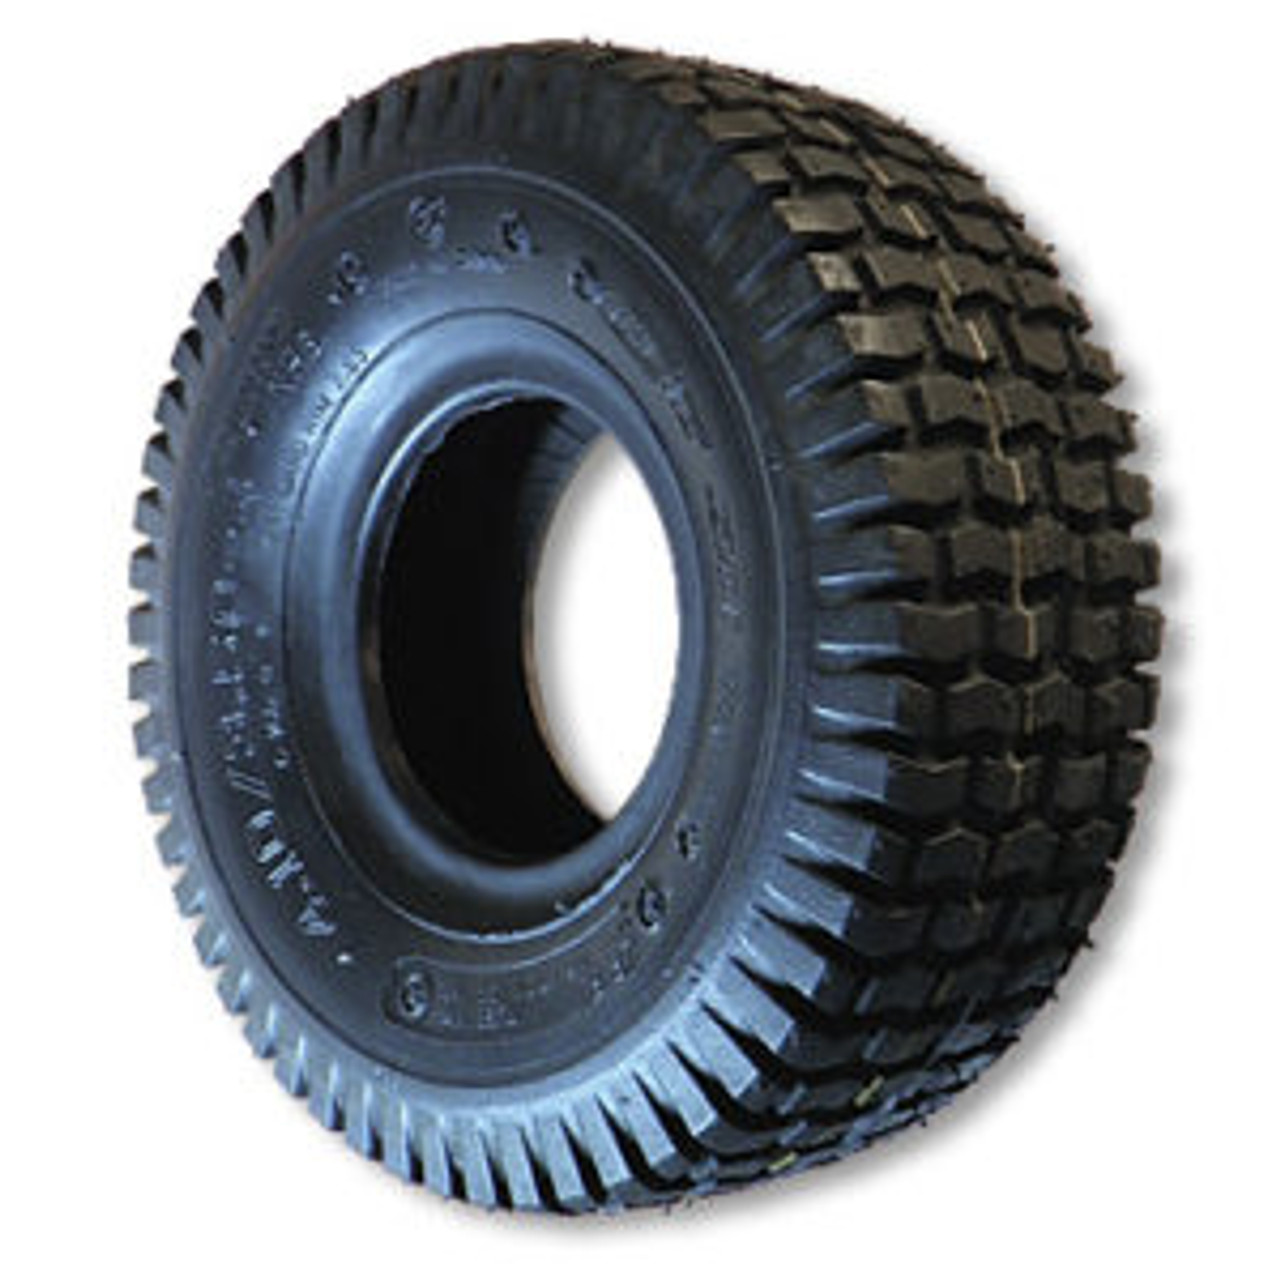 11-400 X 5 Turf Tire, 4 Ply, 4.0" Wide, 10.7" OD